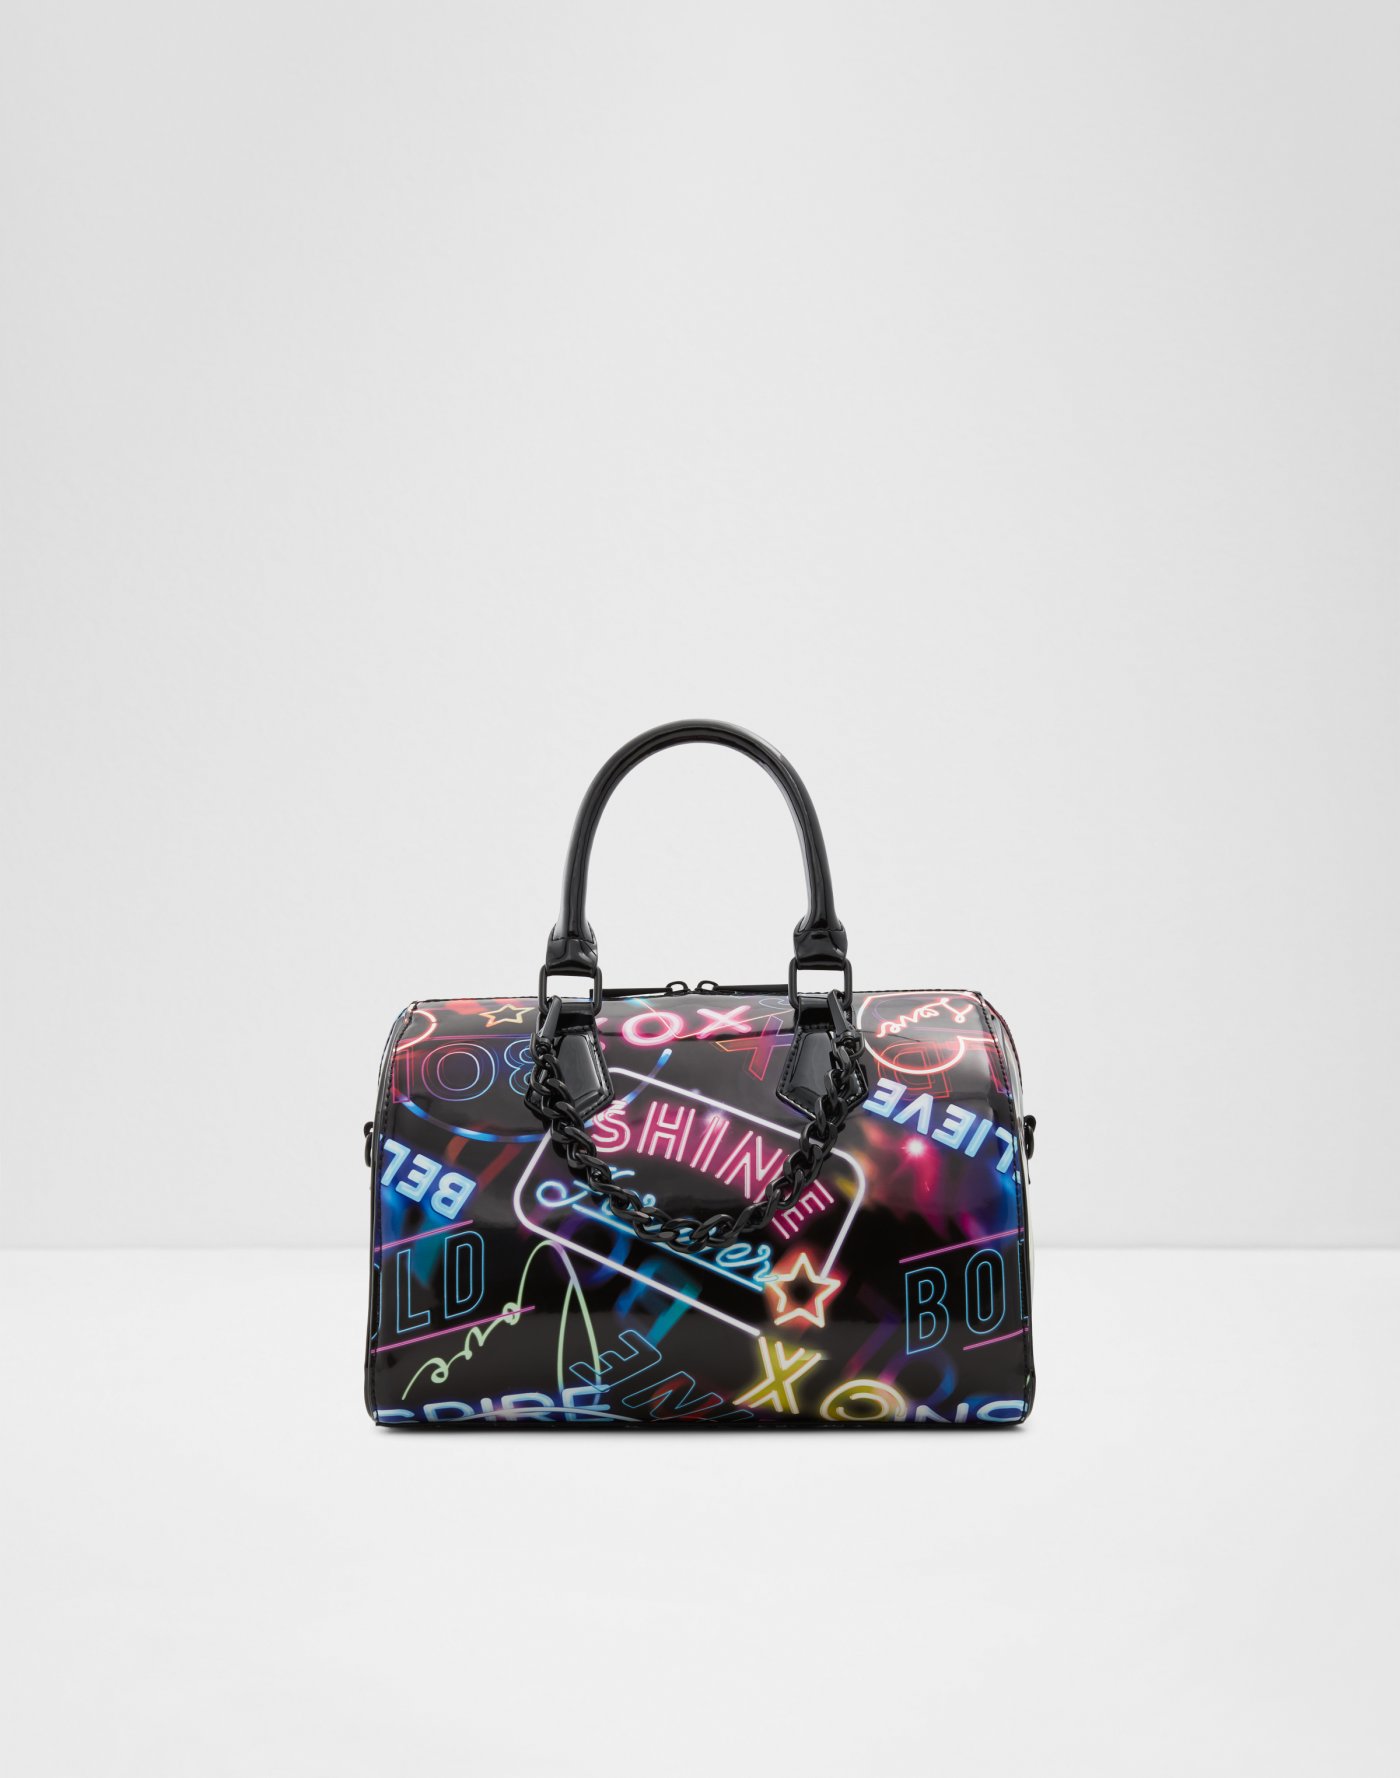 Gum adelig strøm Sale | Women's Handbags & Purses on Sale | ALDO US